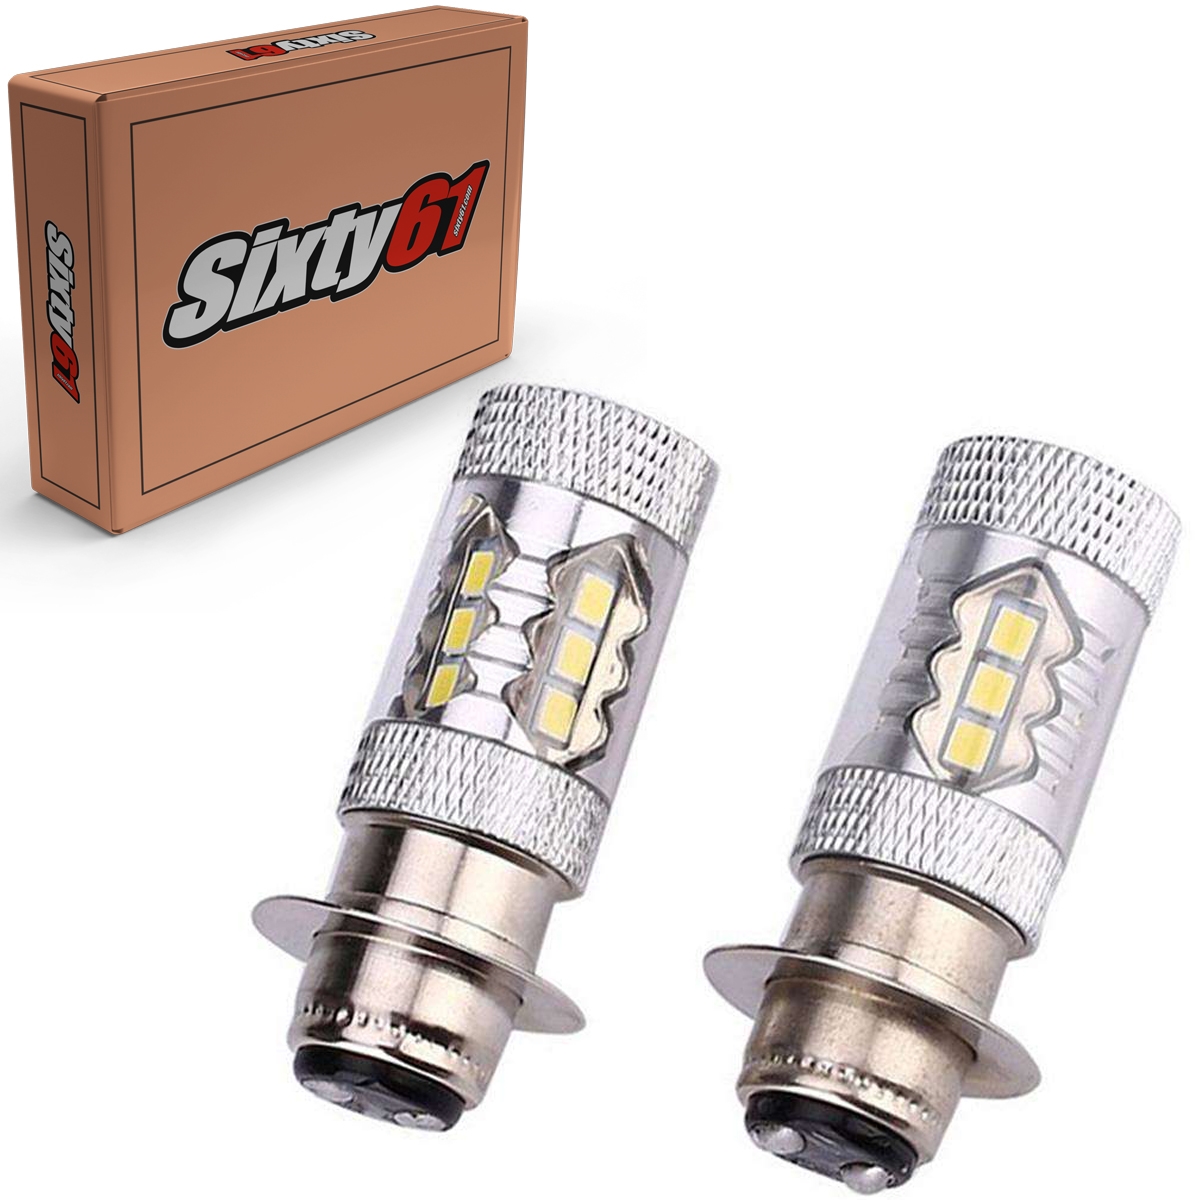 Sixty61 LED Headlight Bulbs for Yamaha Kodiak 400 450 Rhino 660 700